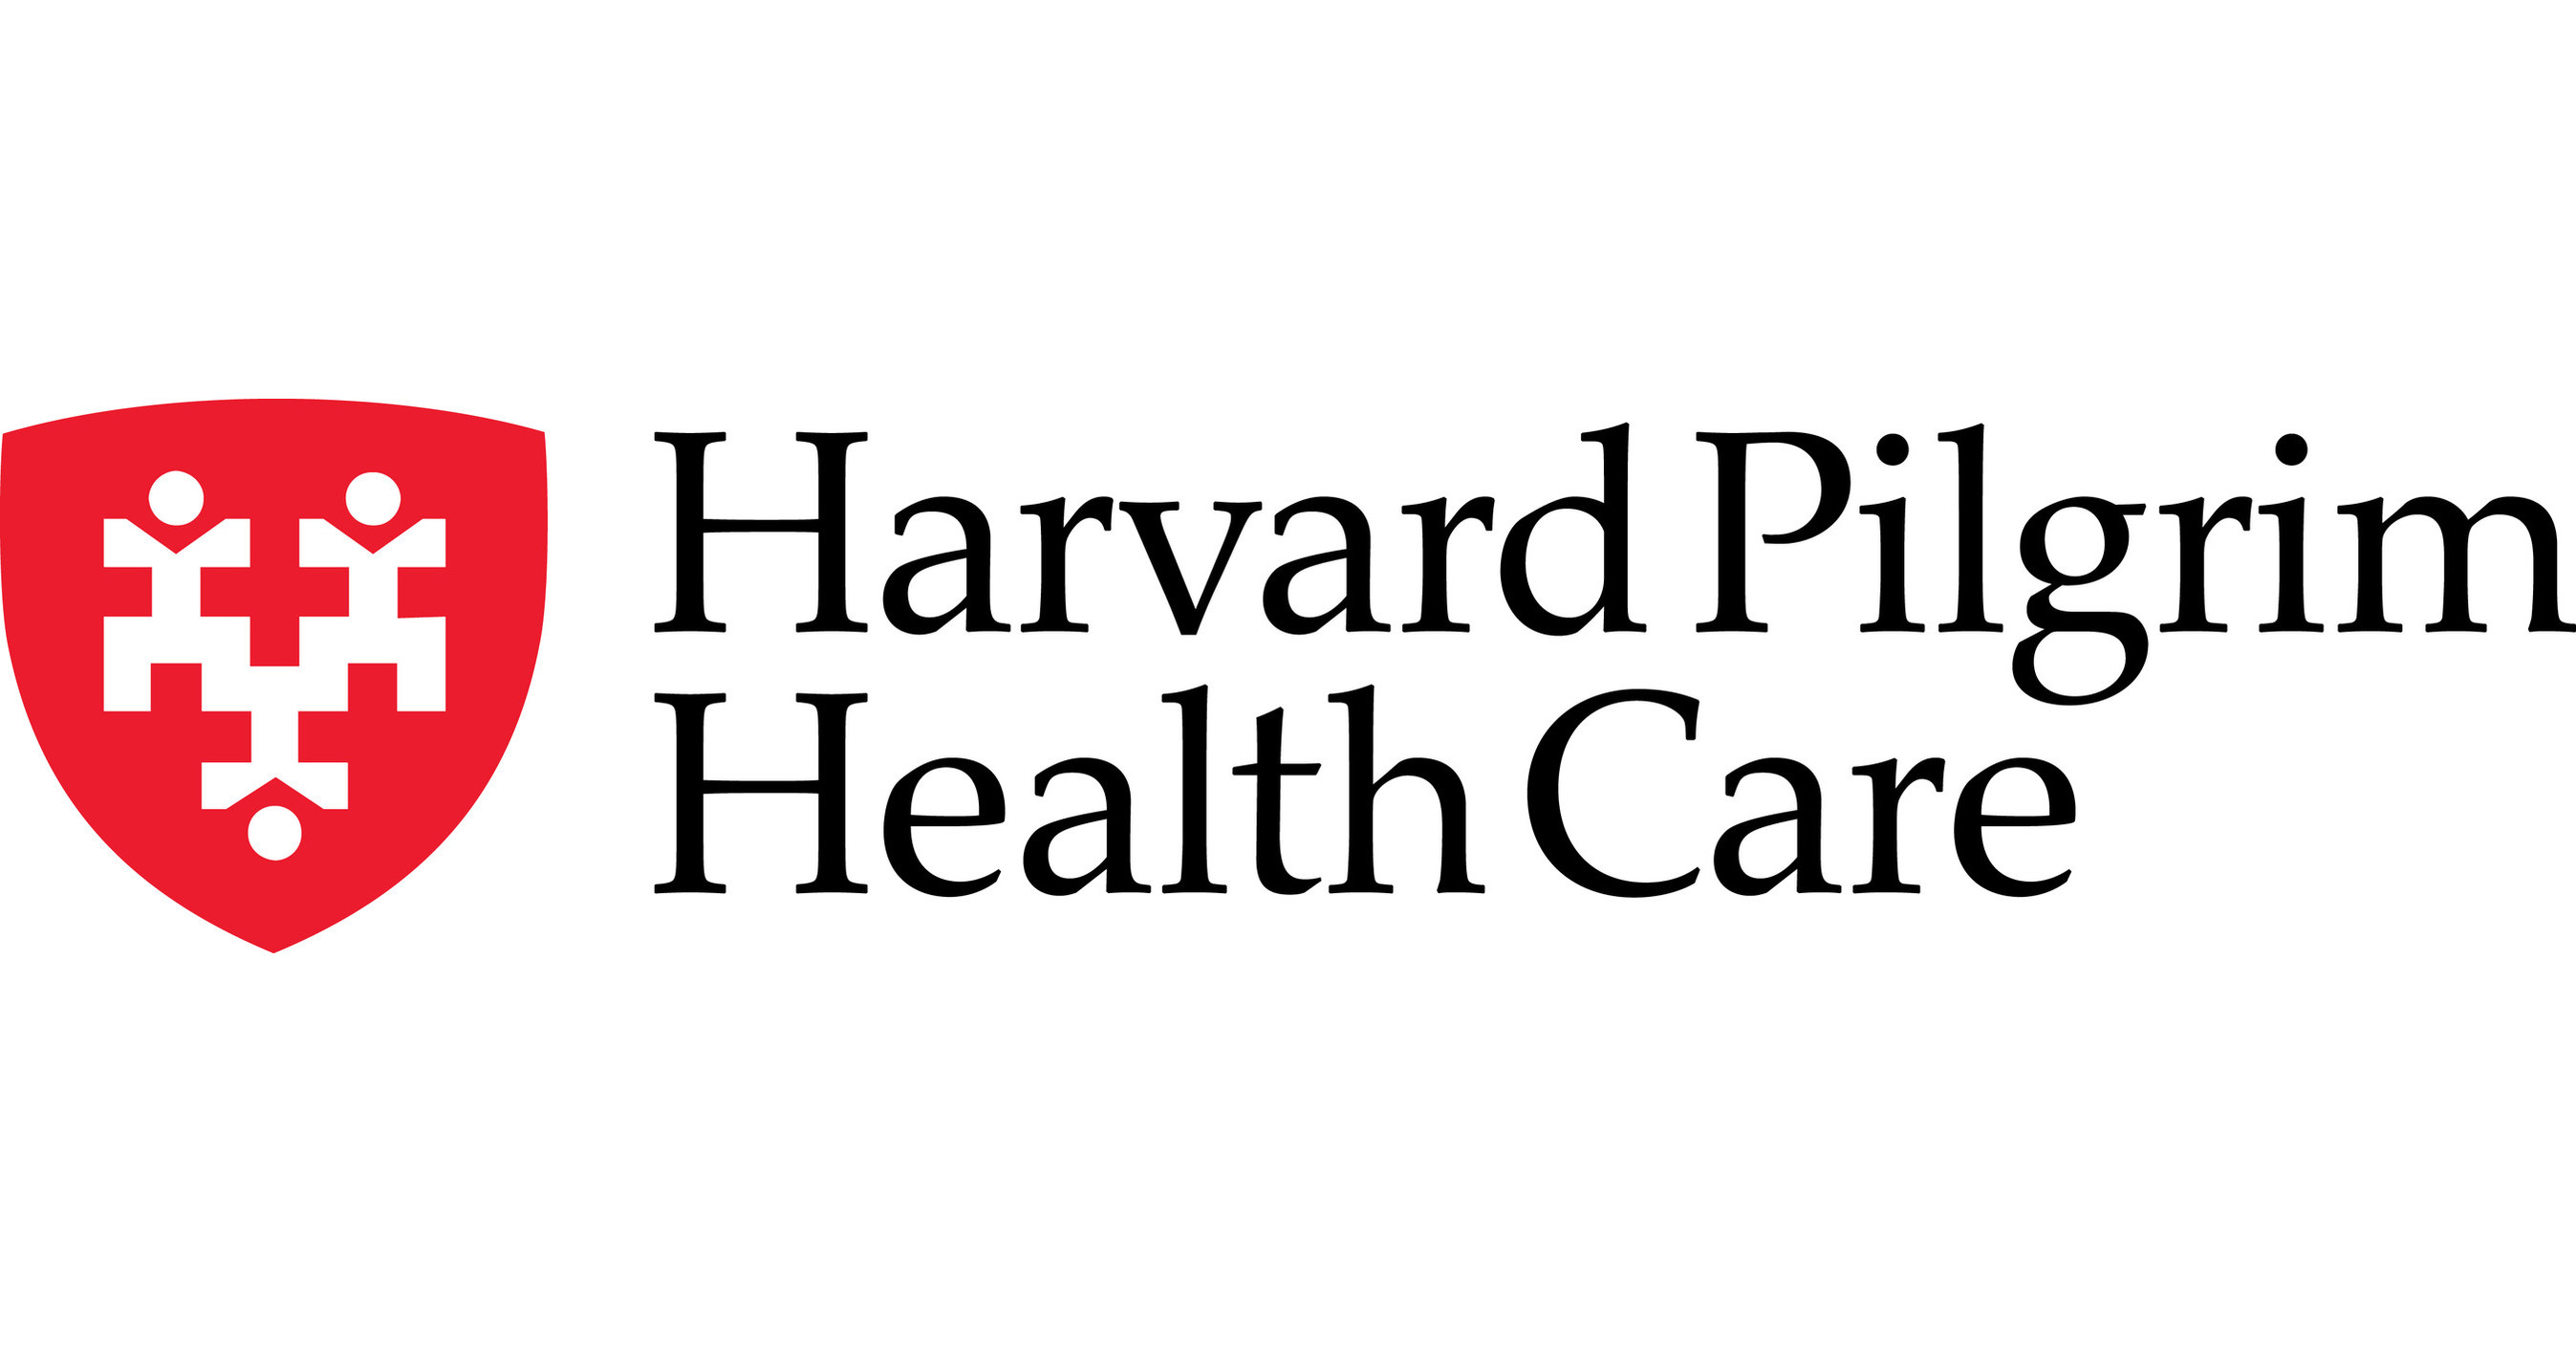 Stellar Health, Harvard Pilgrim Health Care Announce Partnership for